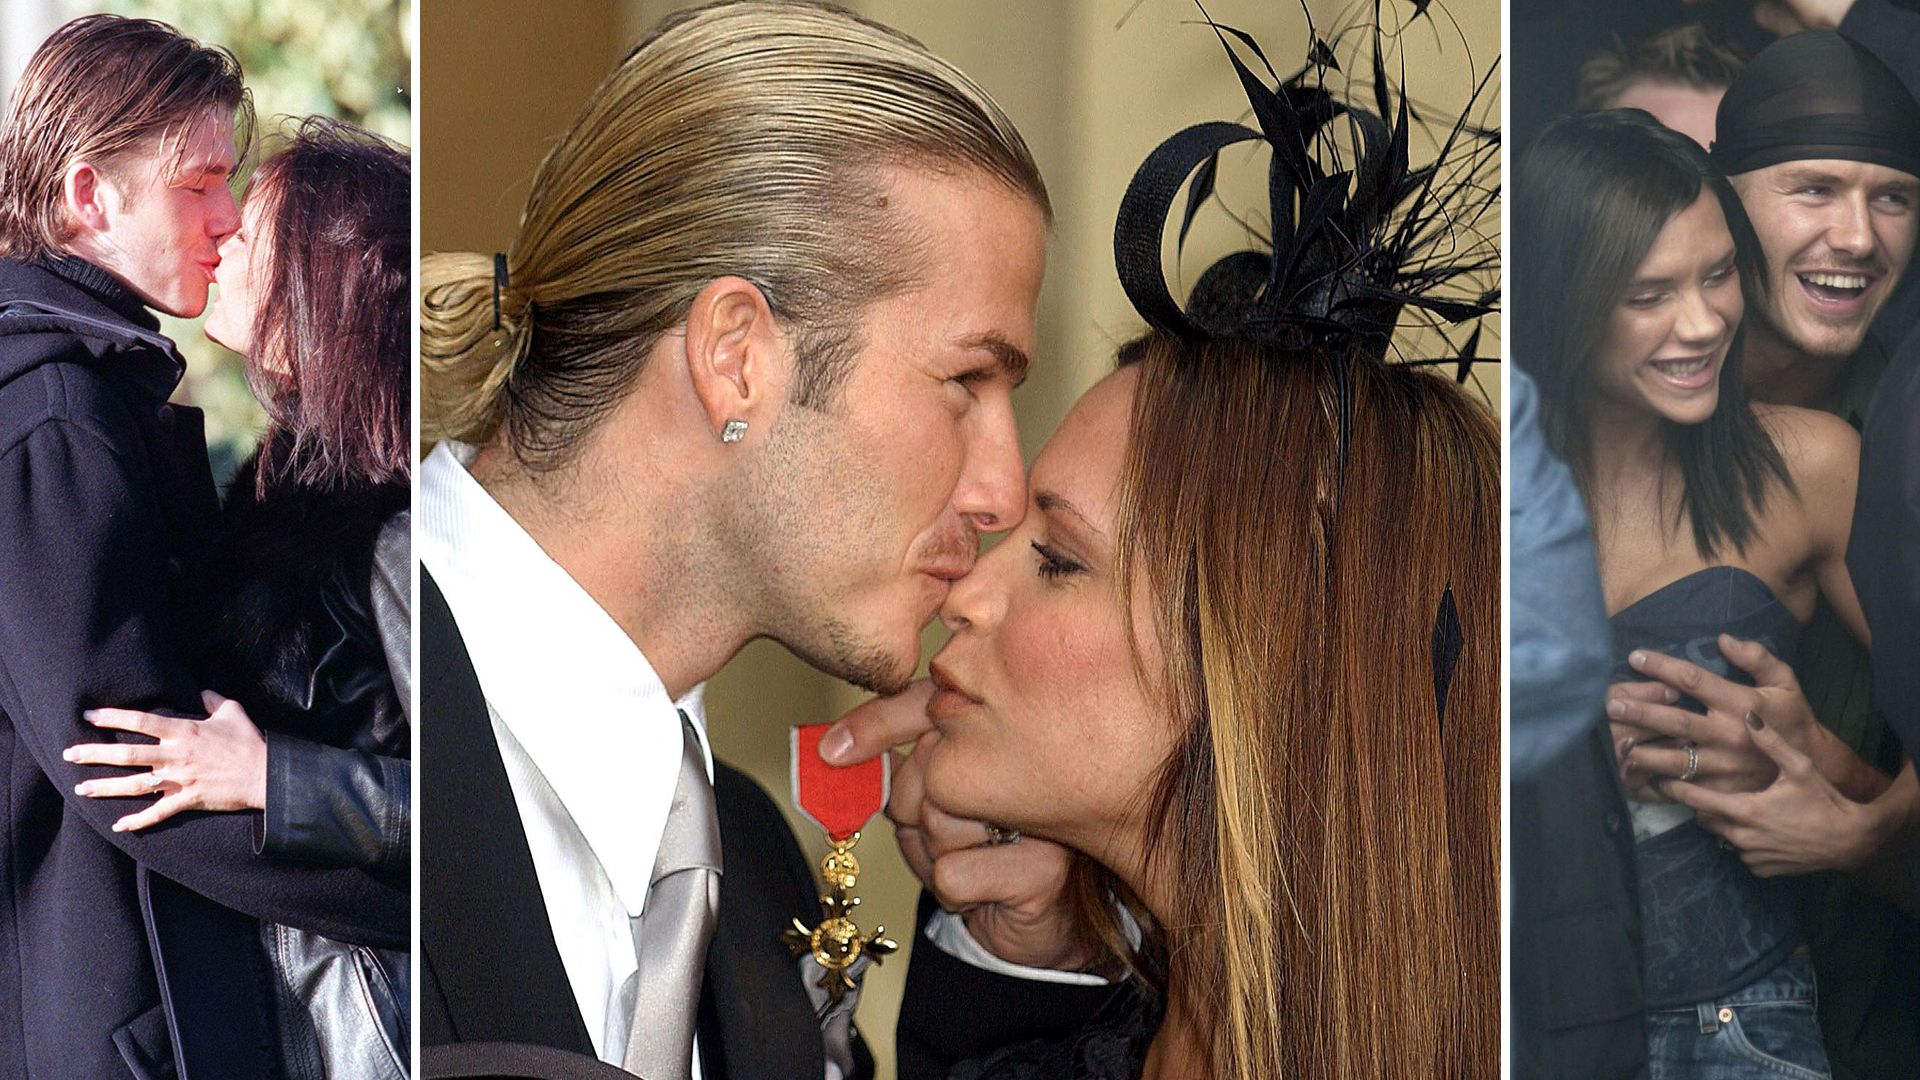 Victoria and David Beckham kissing and hugging